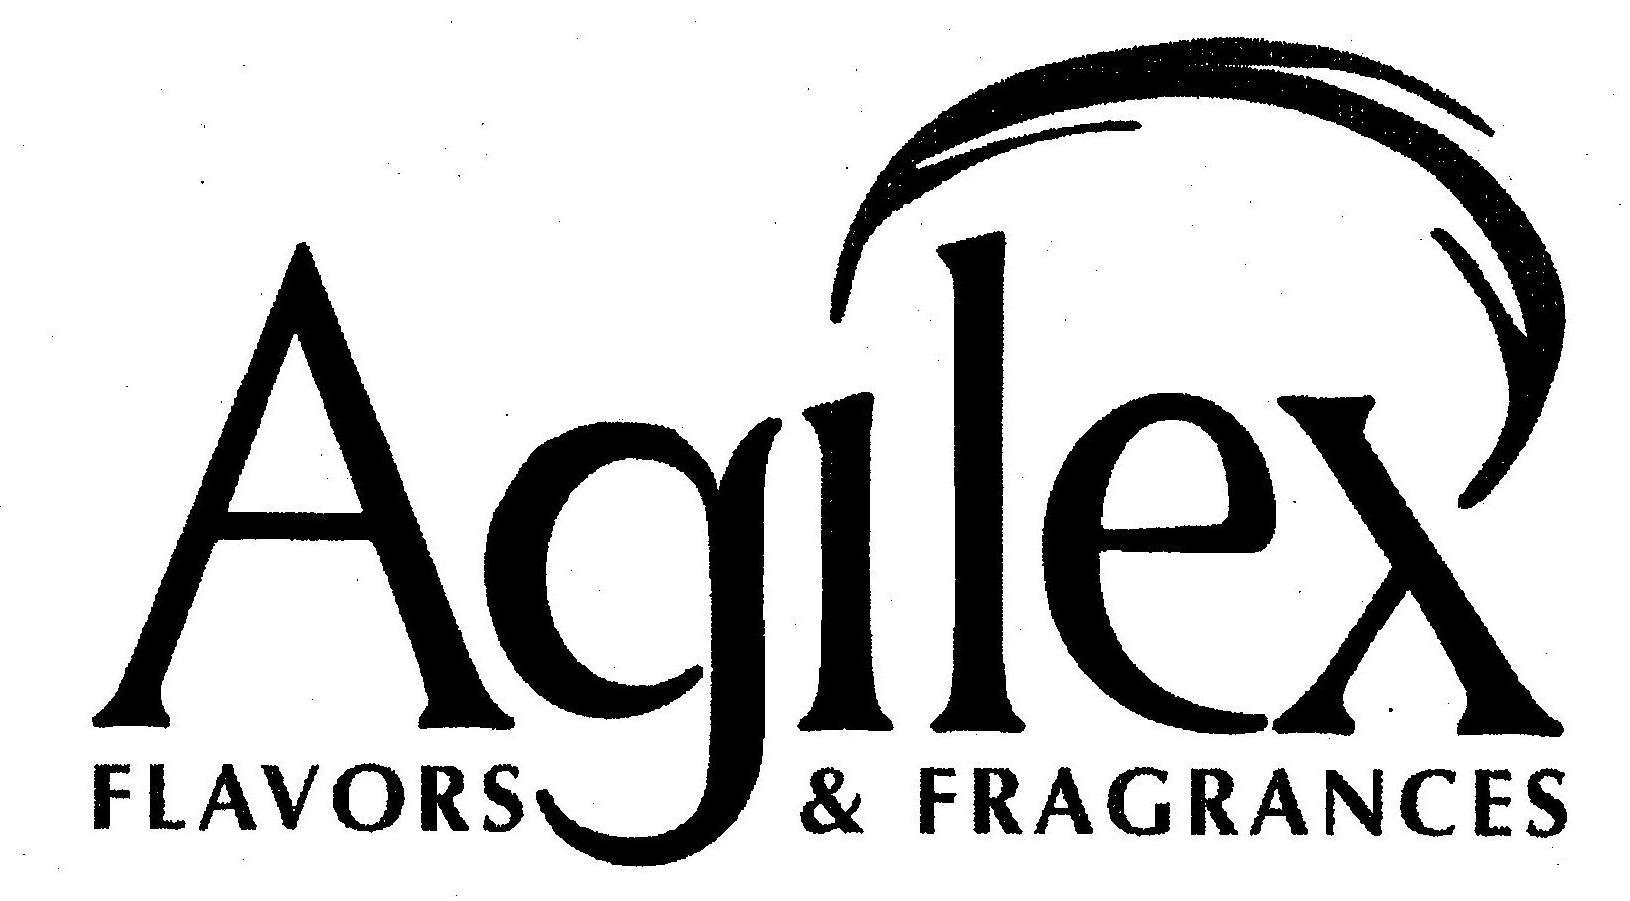 Trademark Logo AGILEX FLAVORS &amp; FRAGRANCES